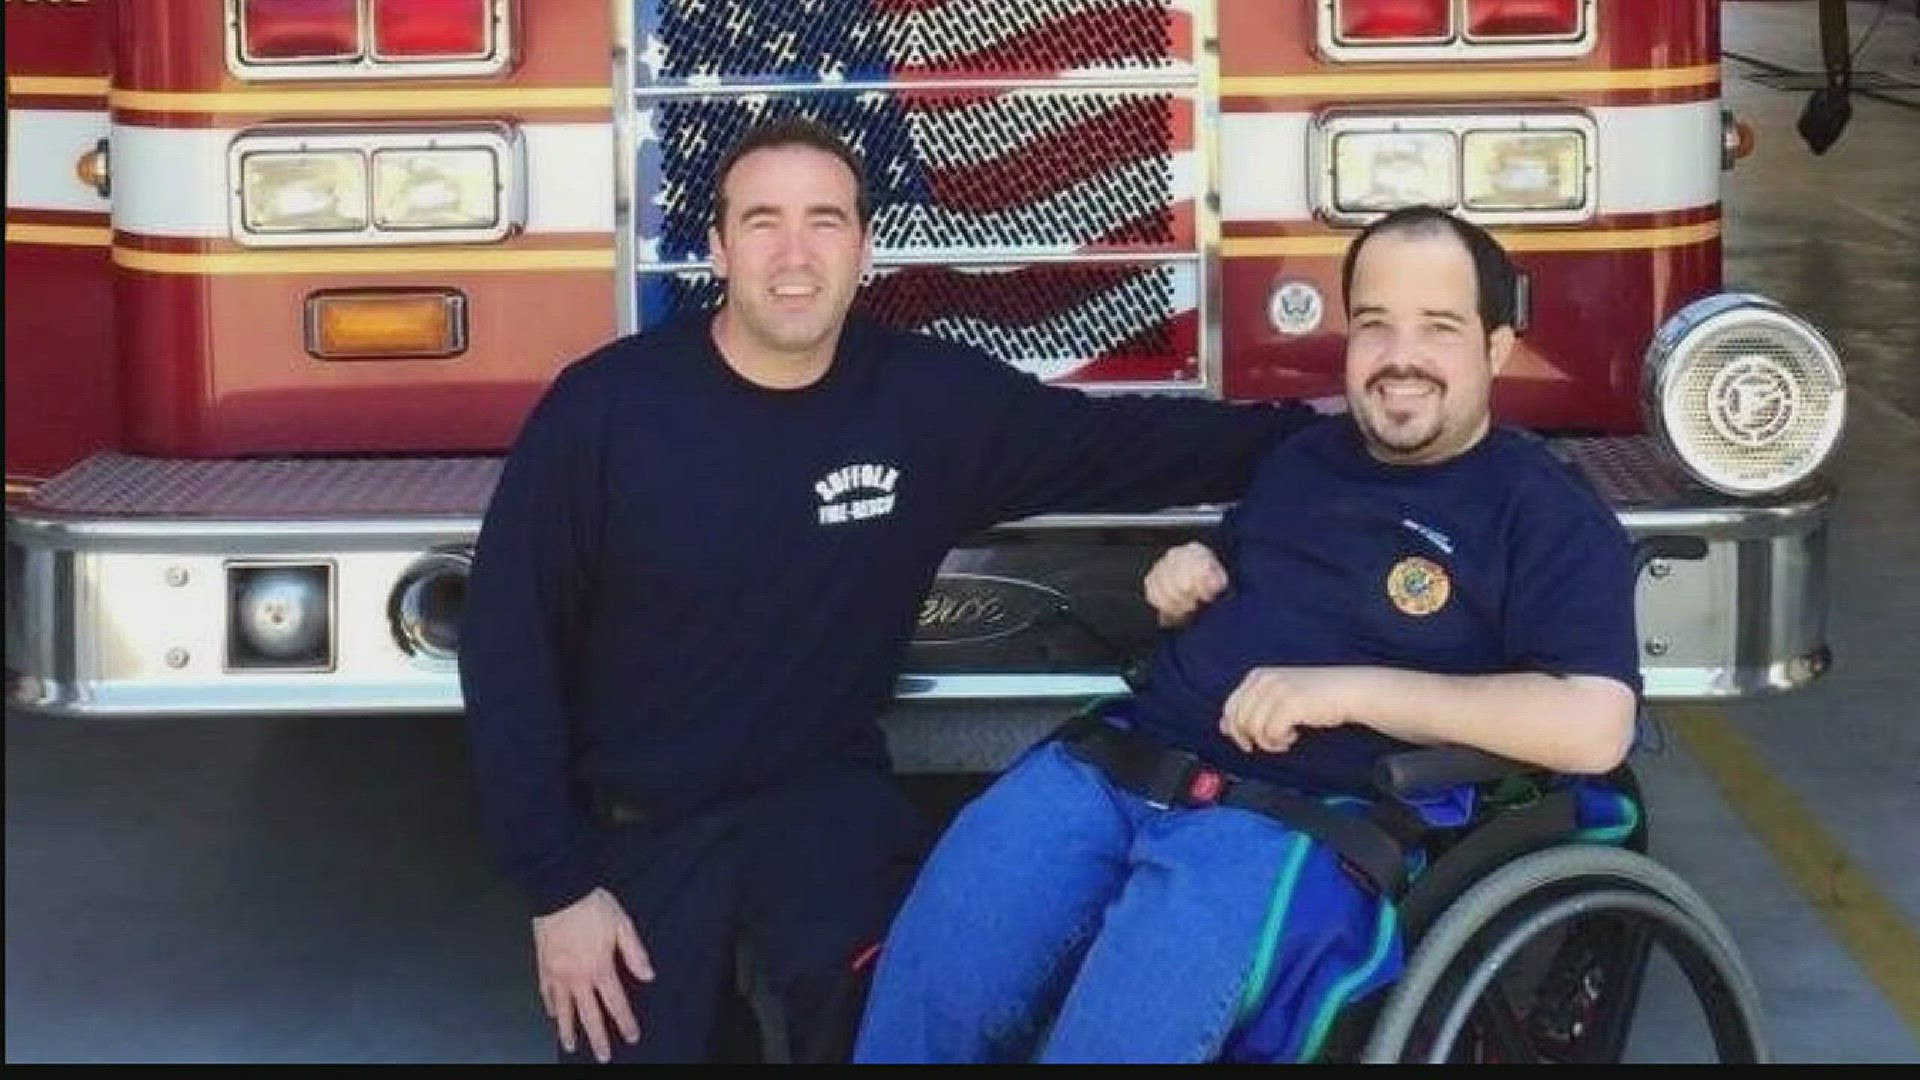 Honorary firefighter passes away suddenly